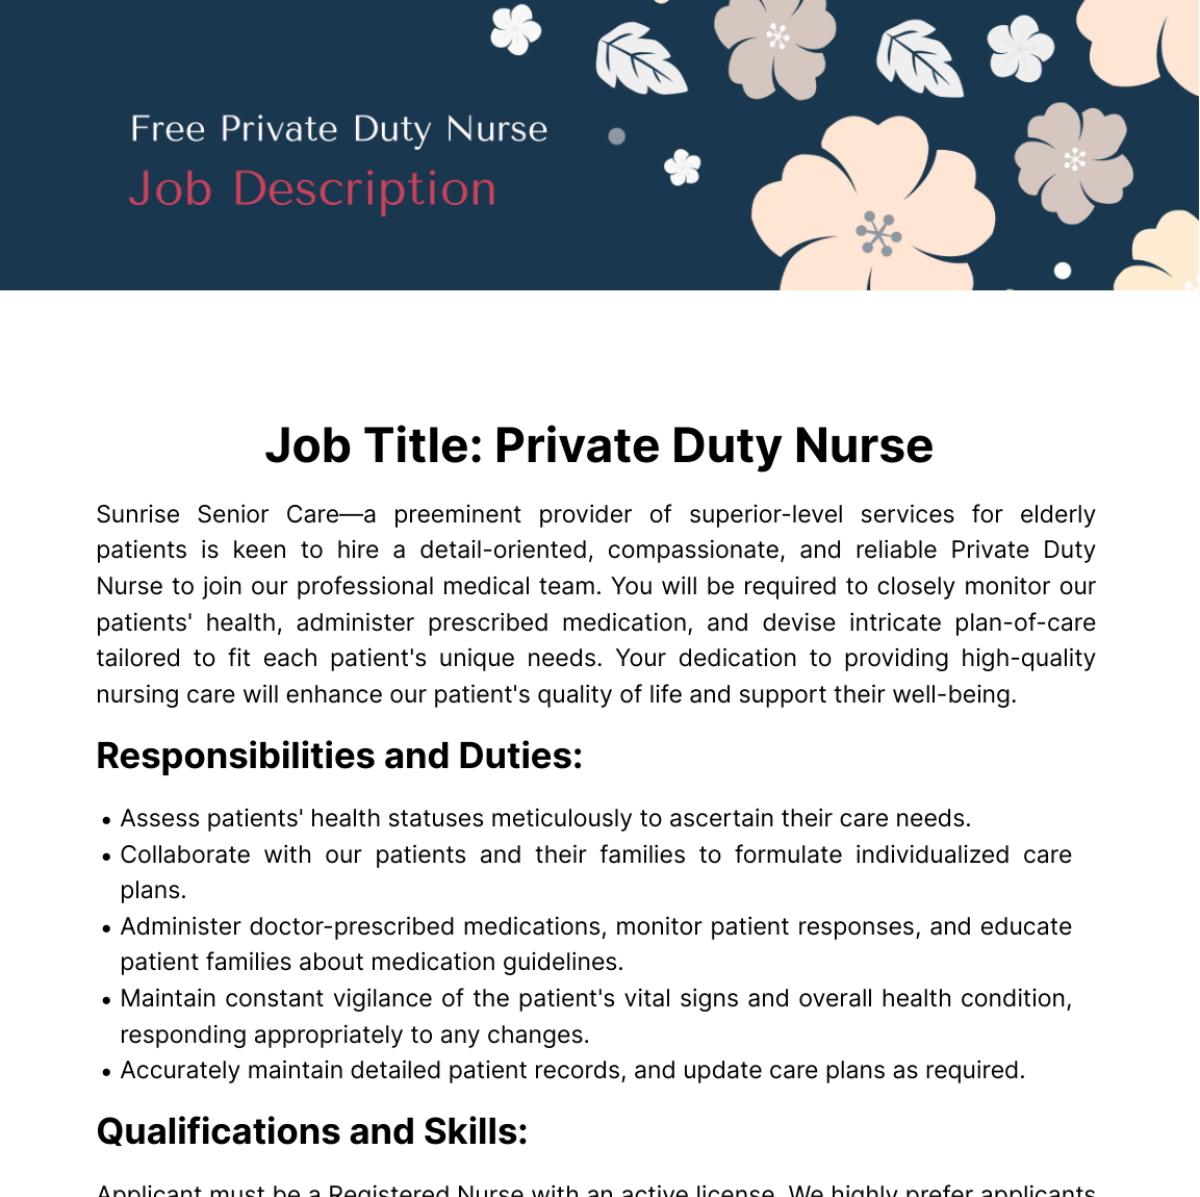 Free Private Duty Nurse Job Description Template